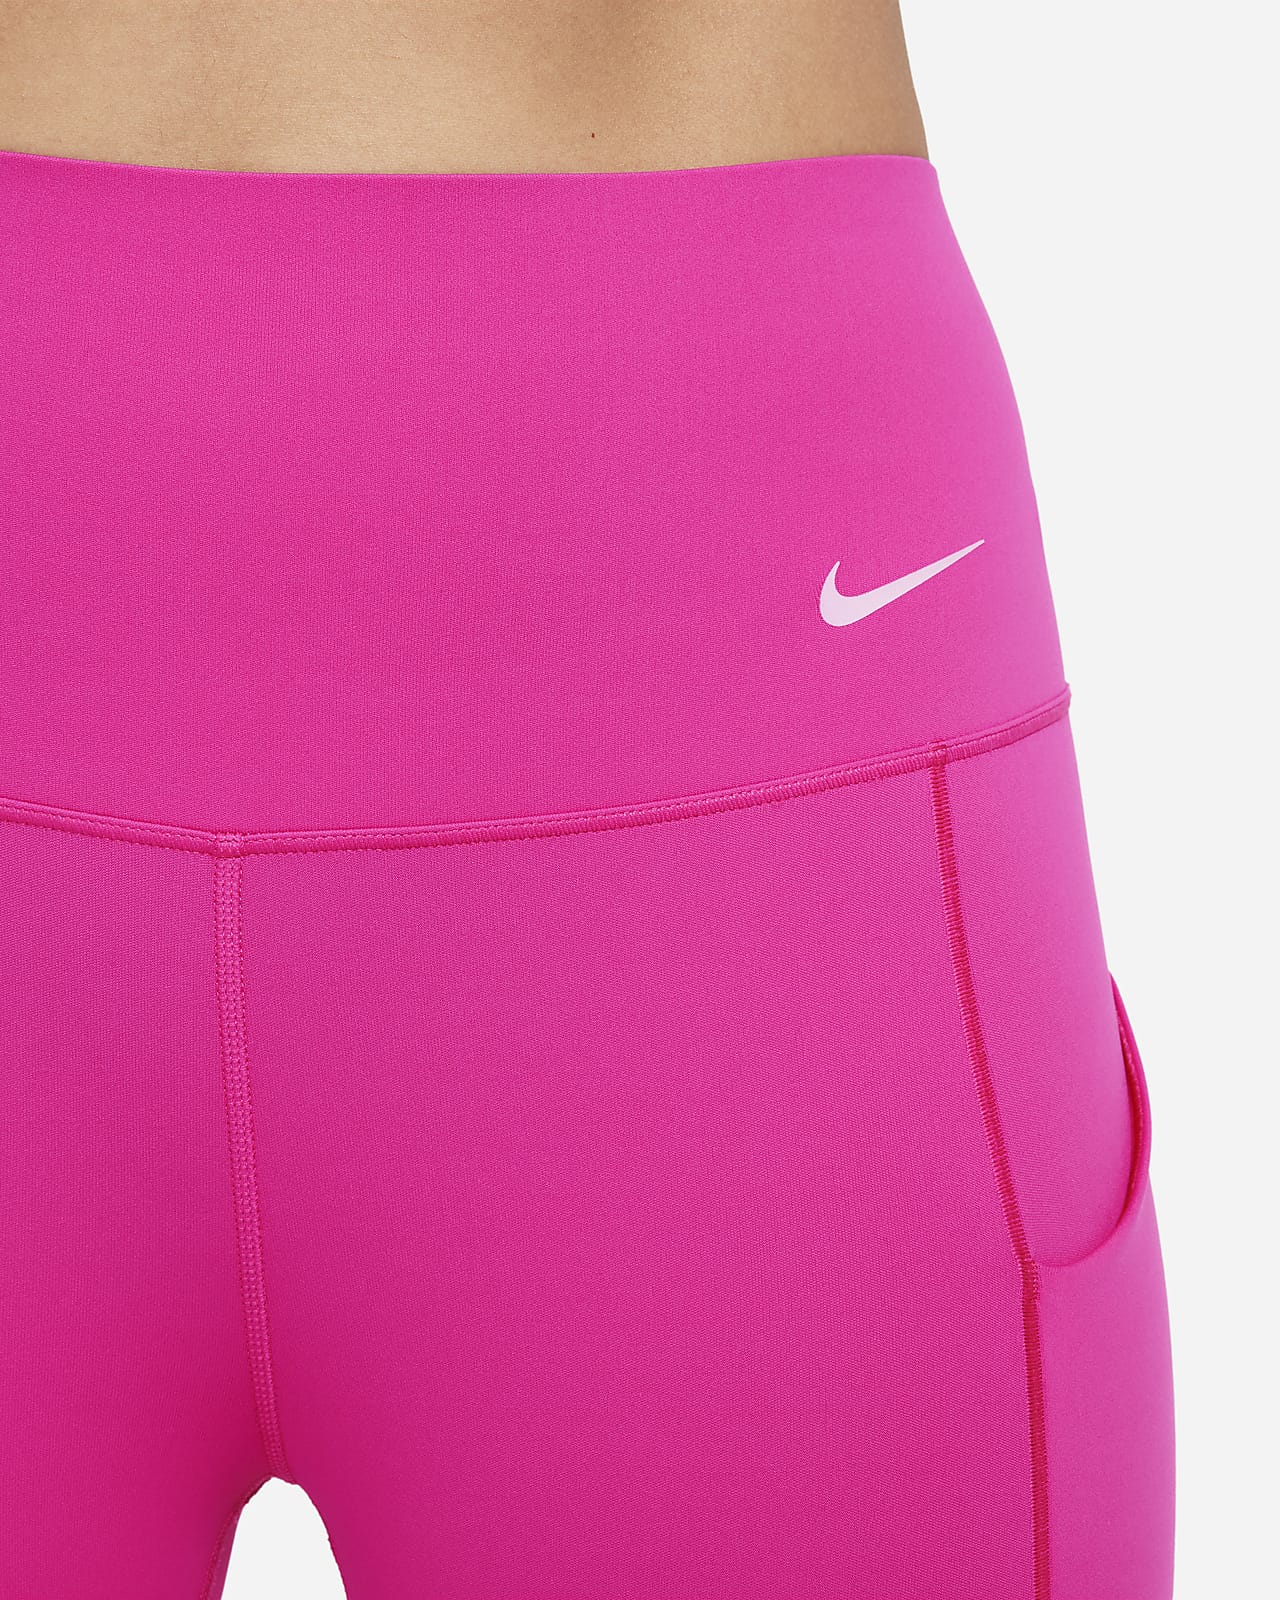 Nike Running Swoosh logo 7/8 leggings in red